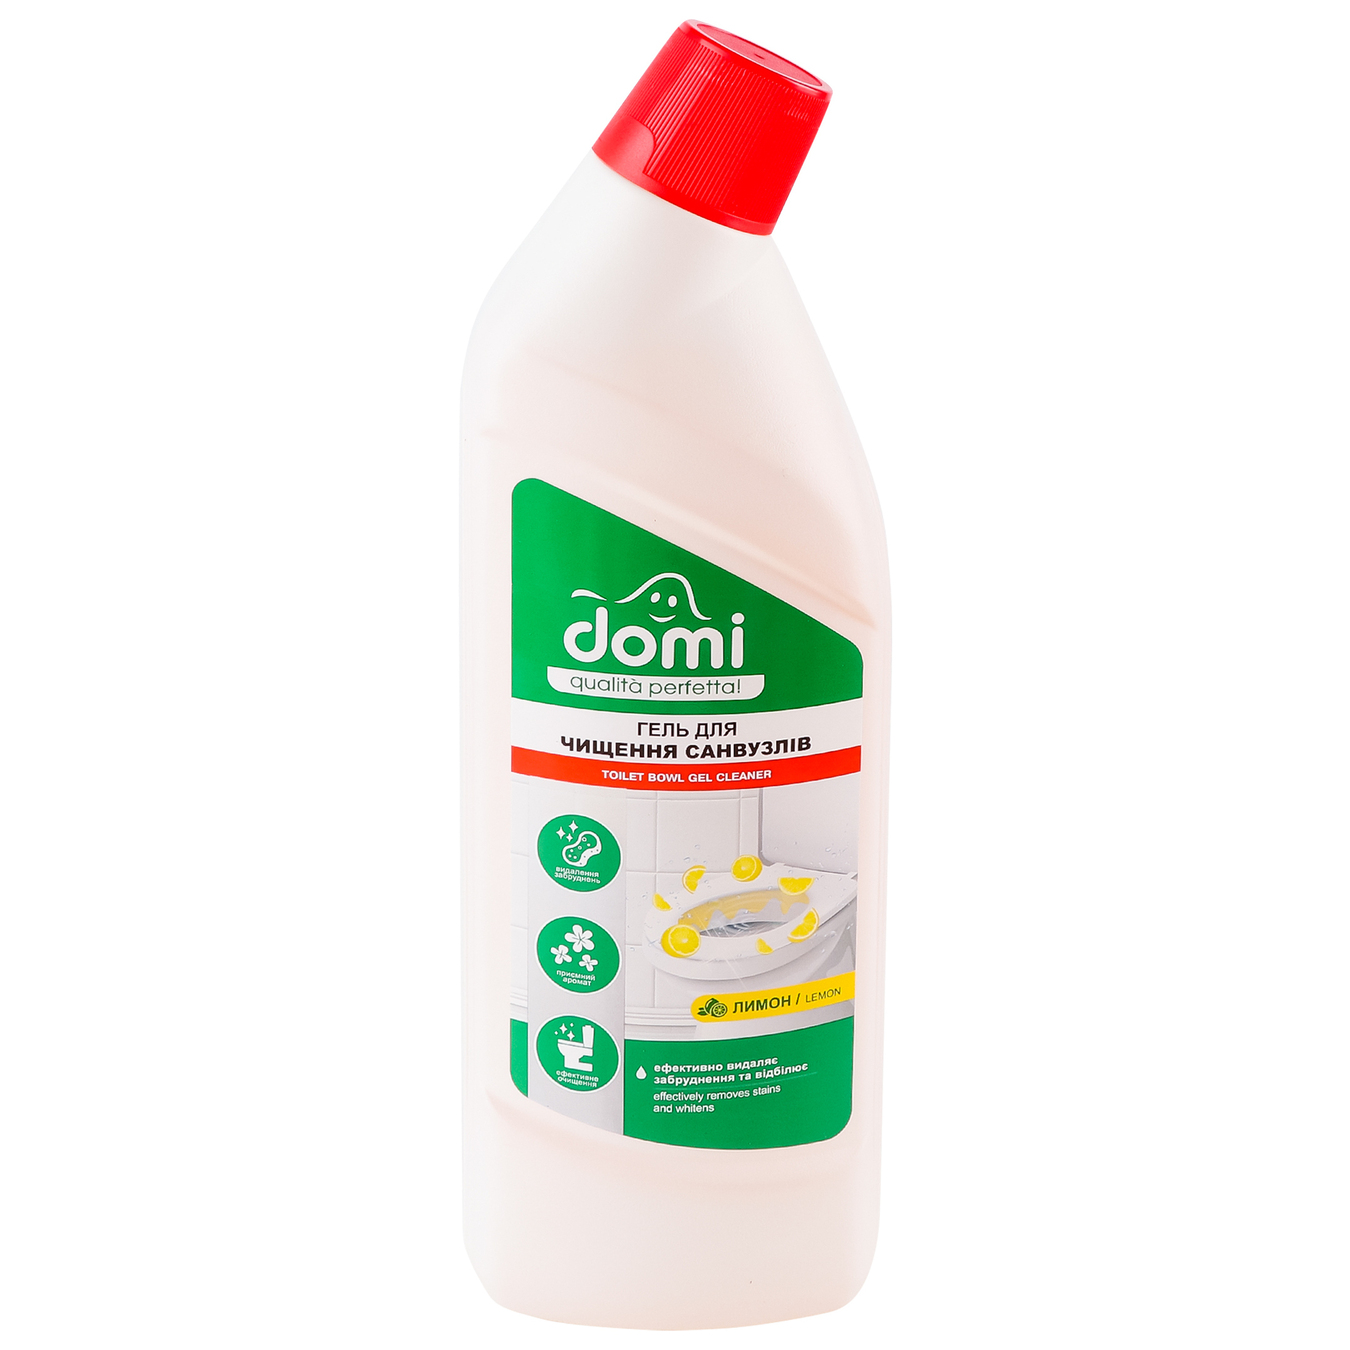 Gel for cleaning bathrooms Domi Lemon 1 l 4